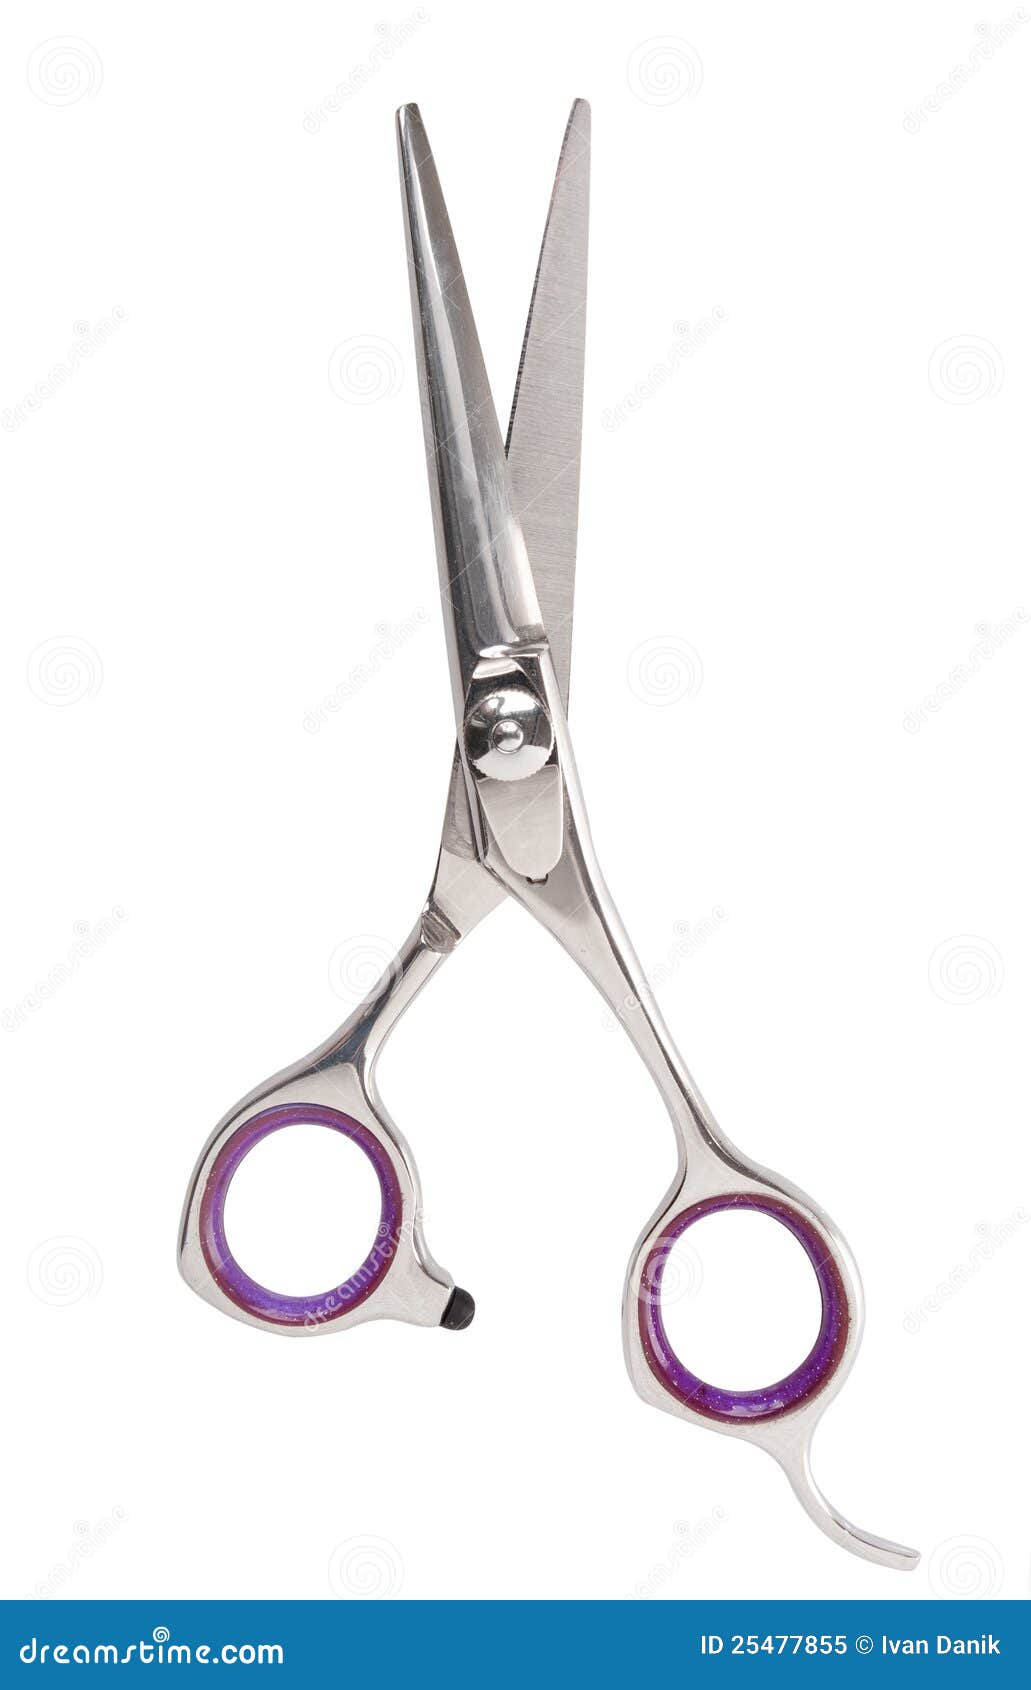 professional haircutting scissors